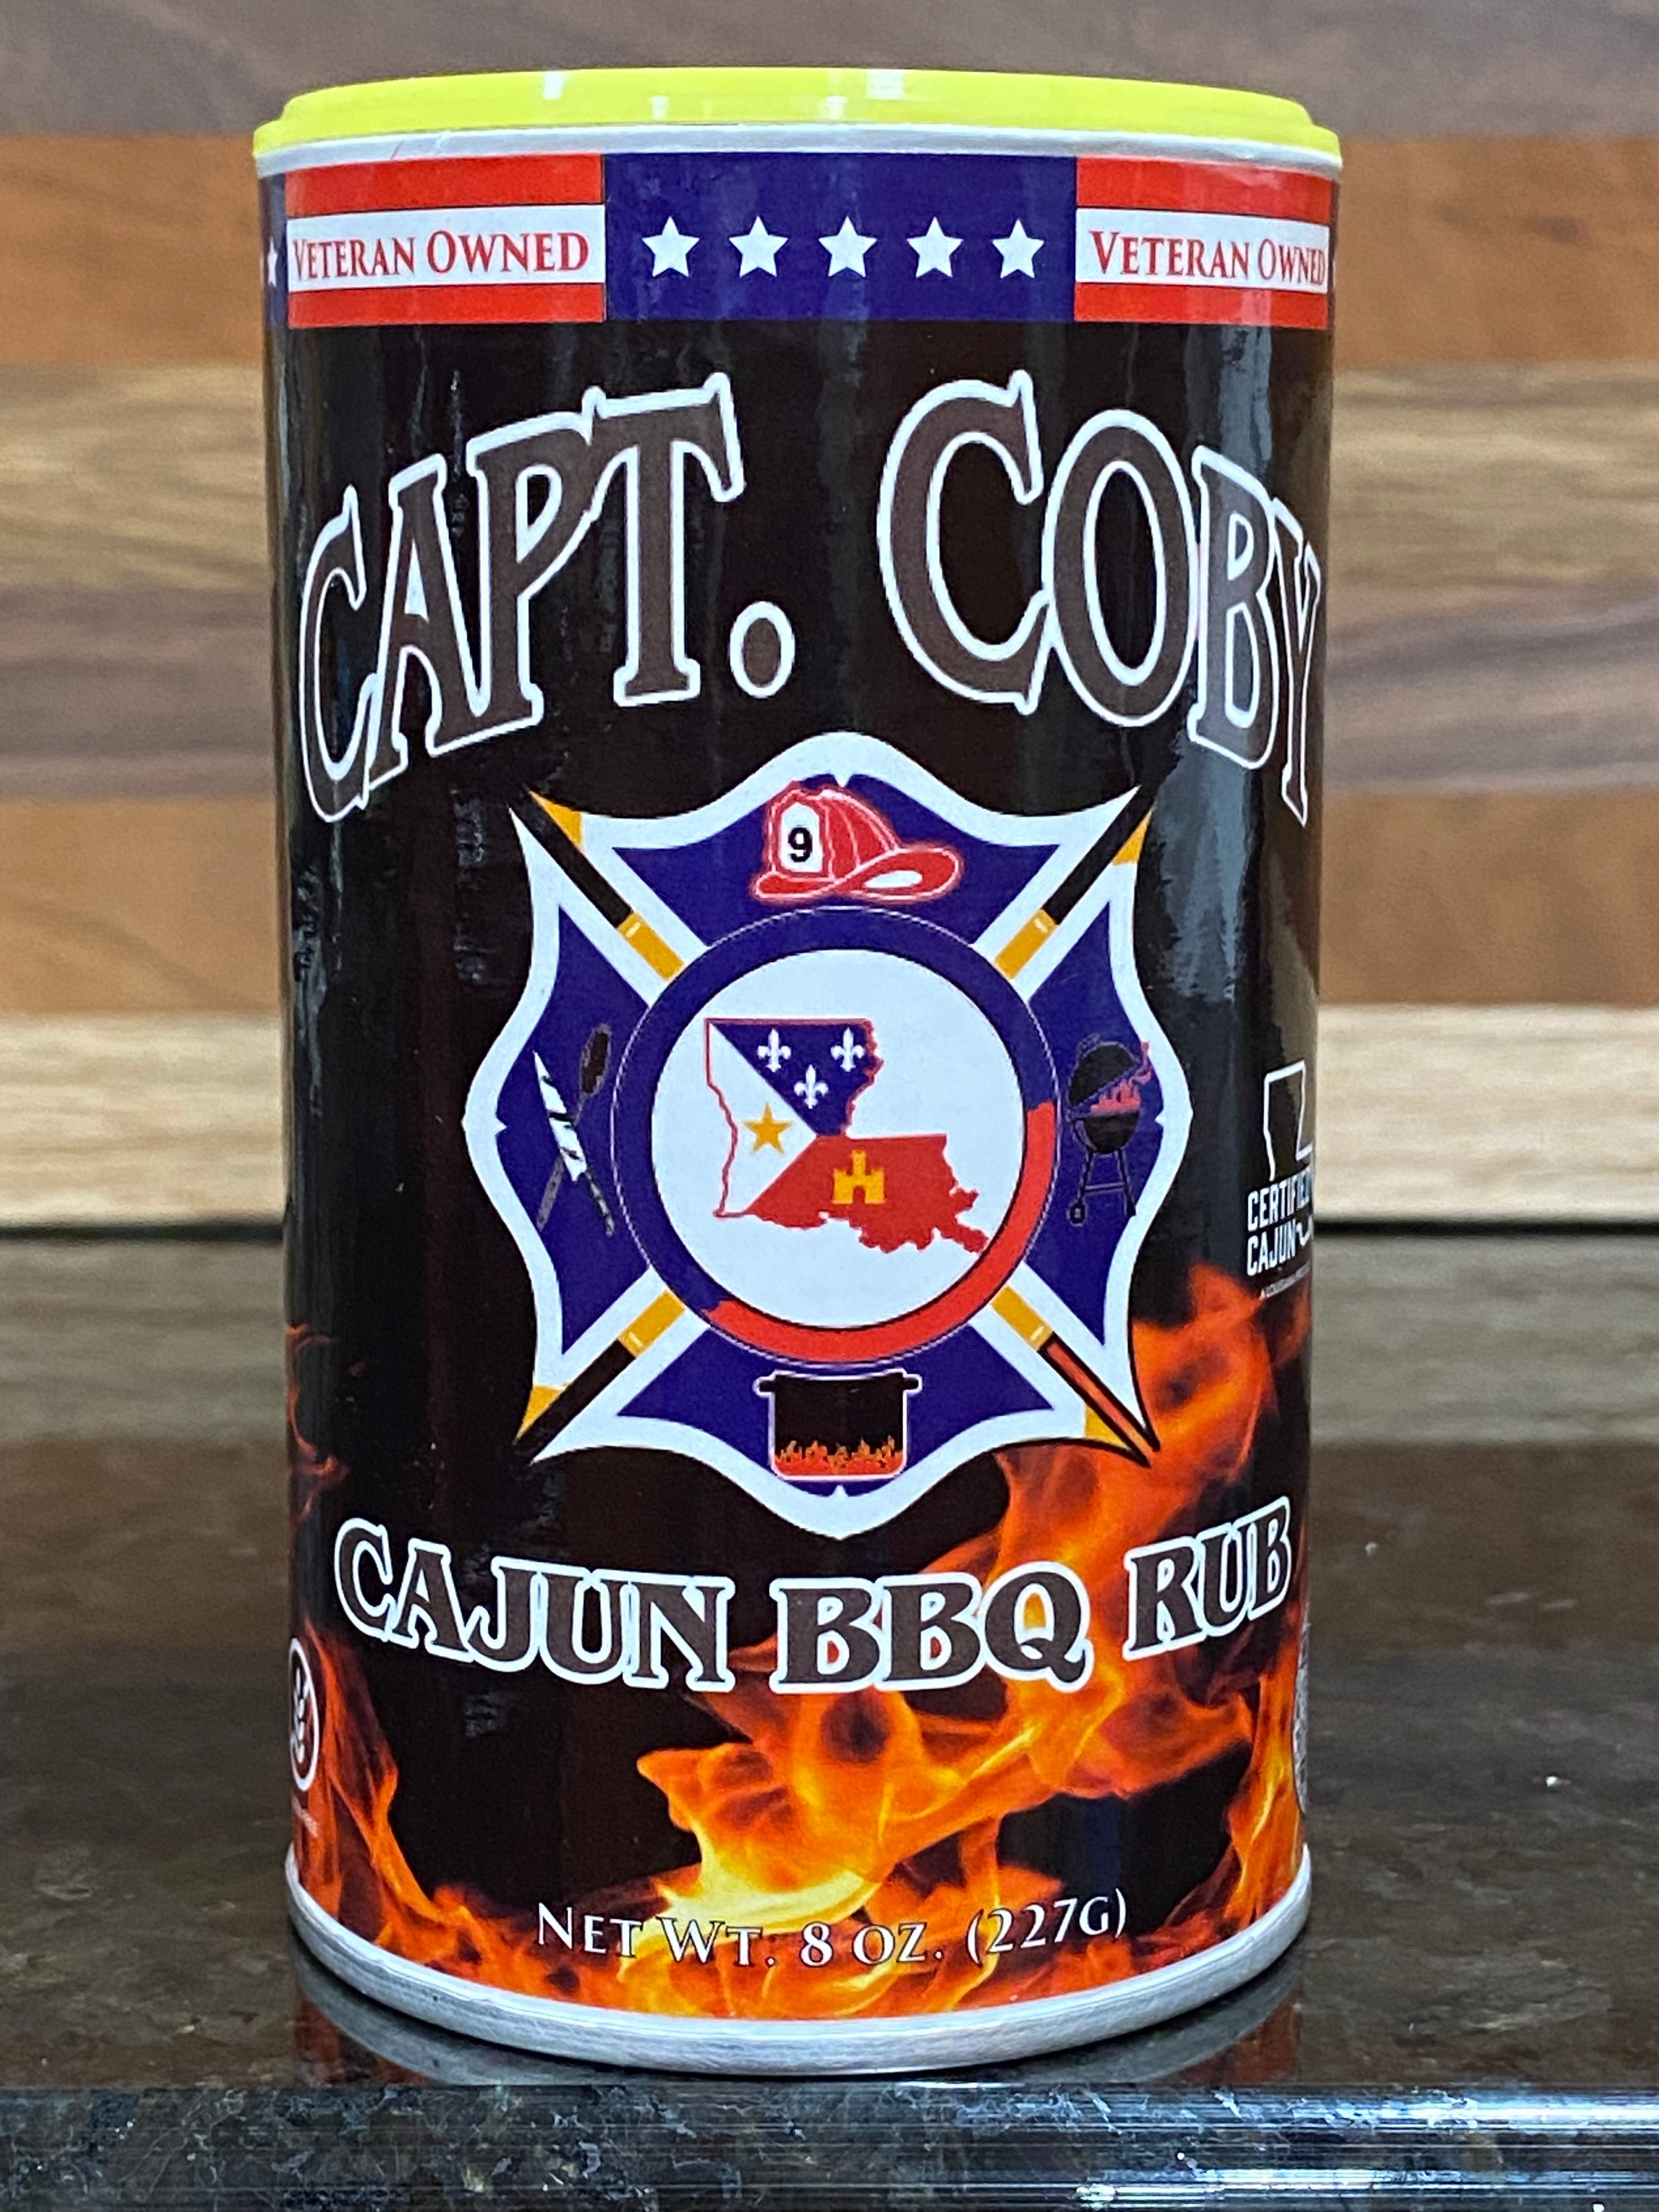 Capt. Coby's Cajun BBQ Rub